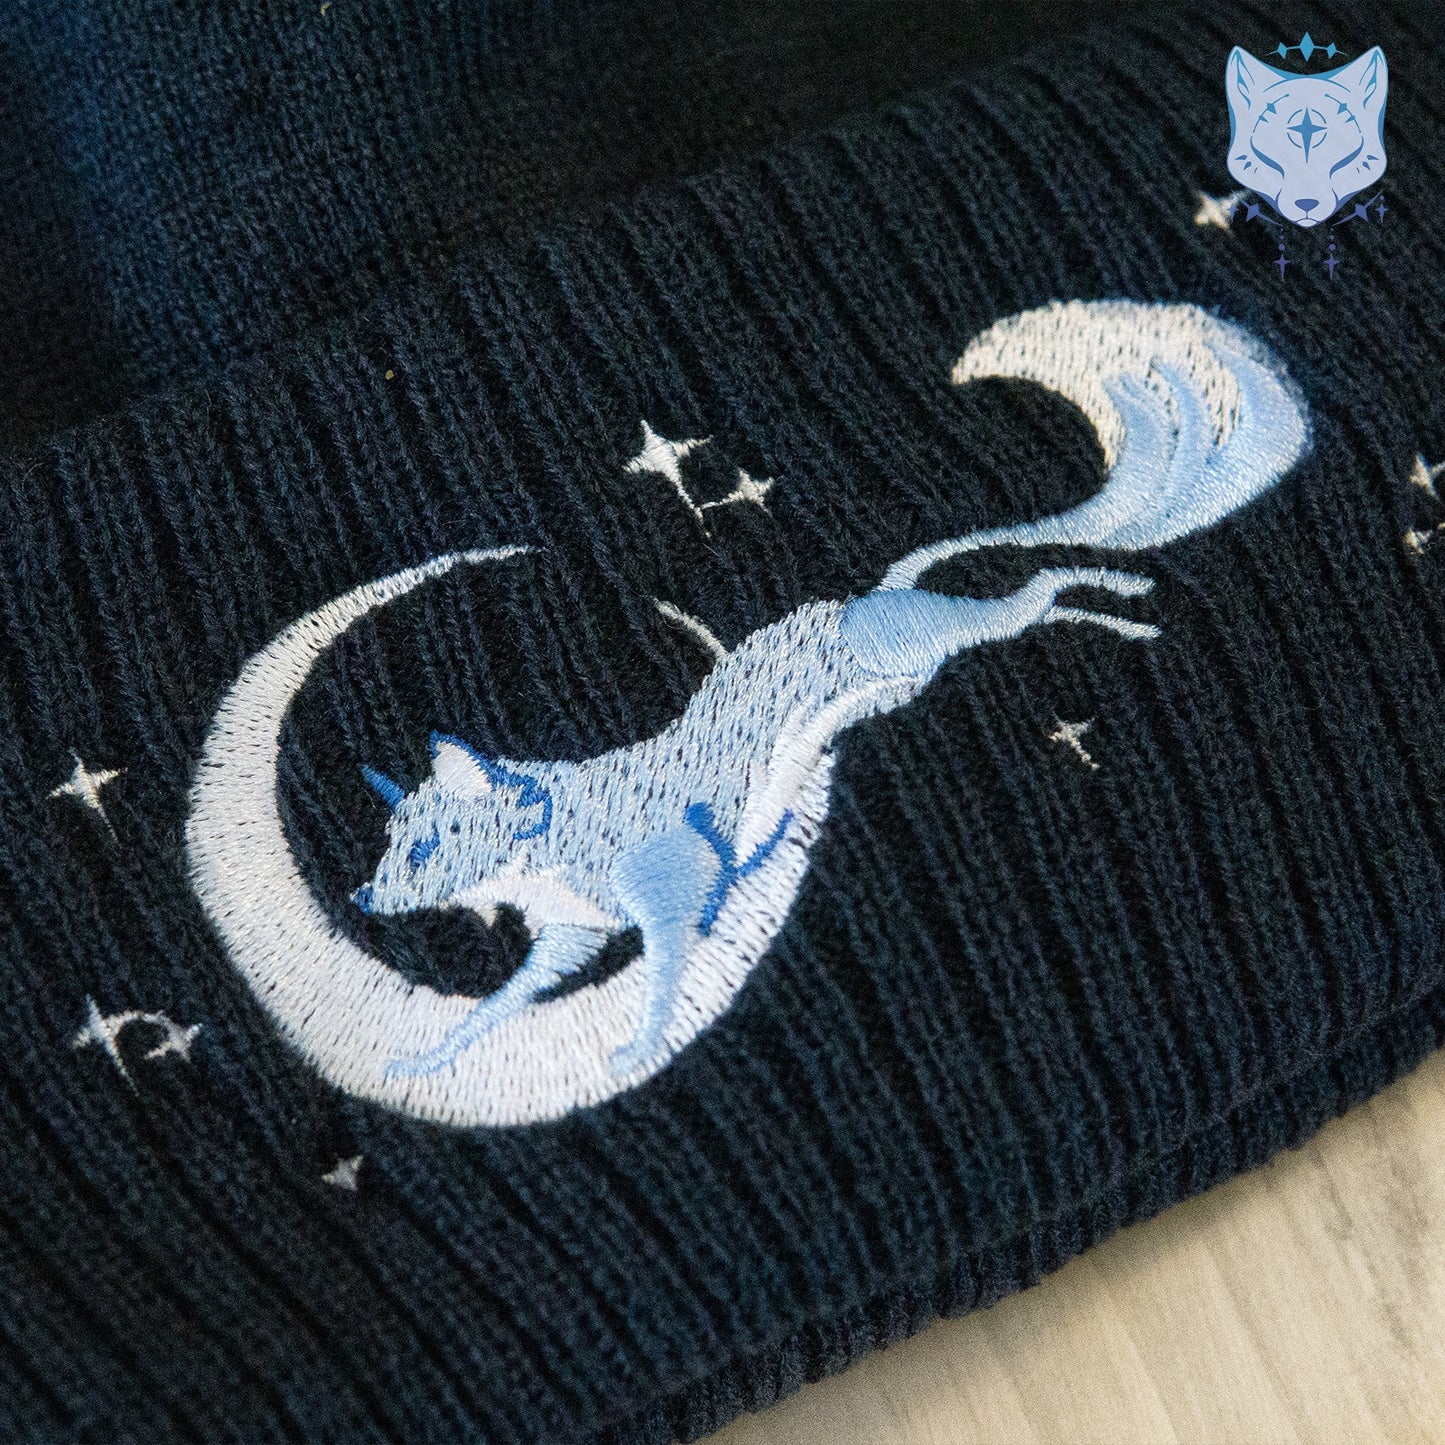 Moon Fox Beanie - Fleece lined bobble hat beanie available in blue or black